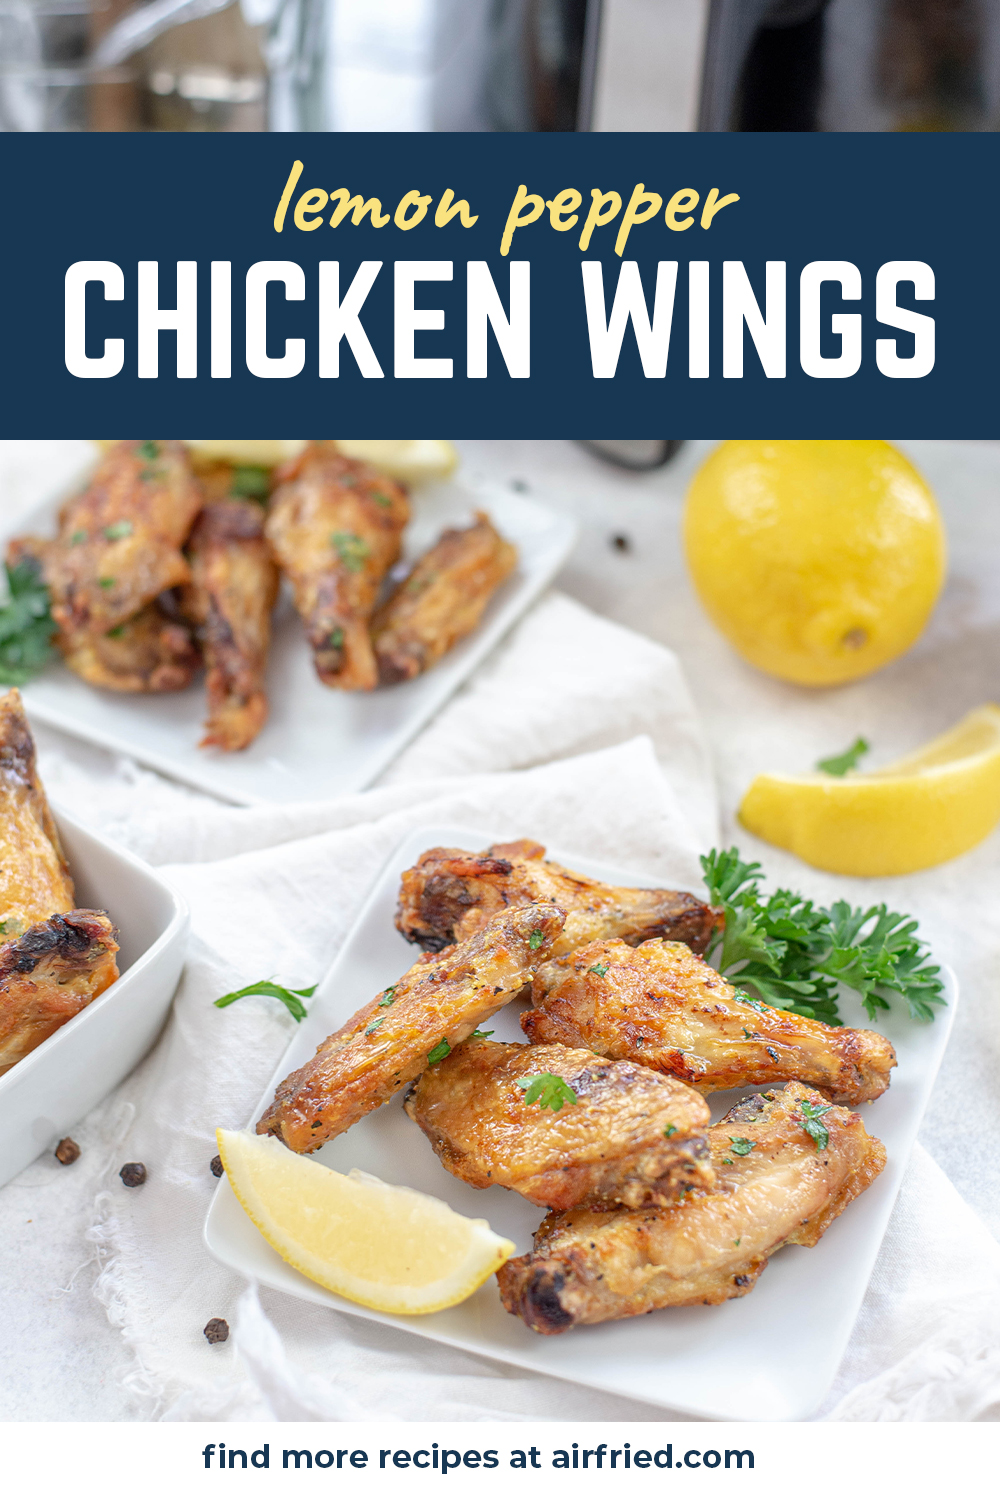 Crispy chicken wings taste great with this light lemon pepper seasoning coating them!